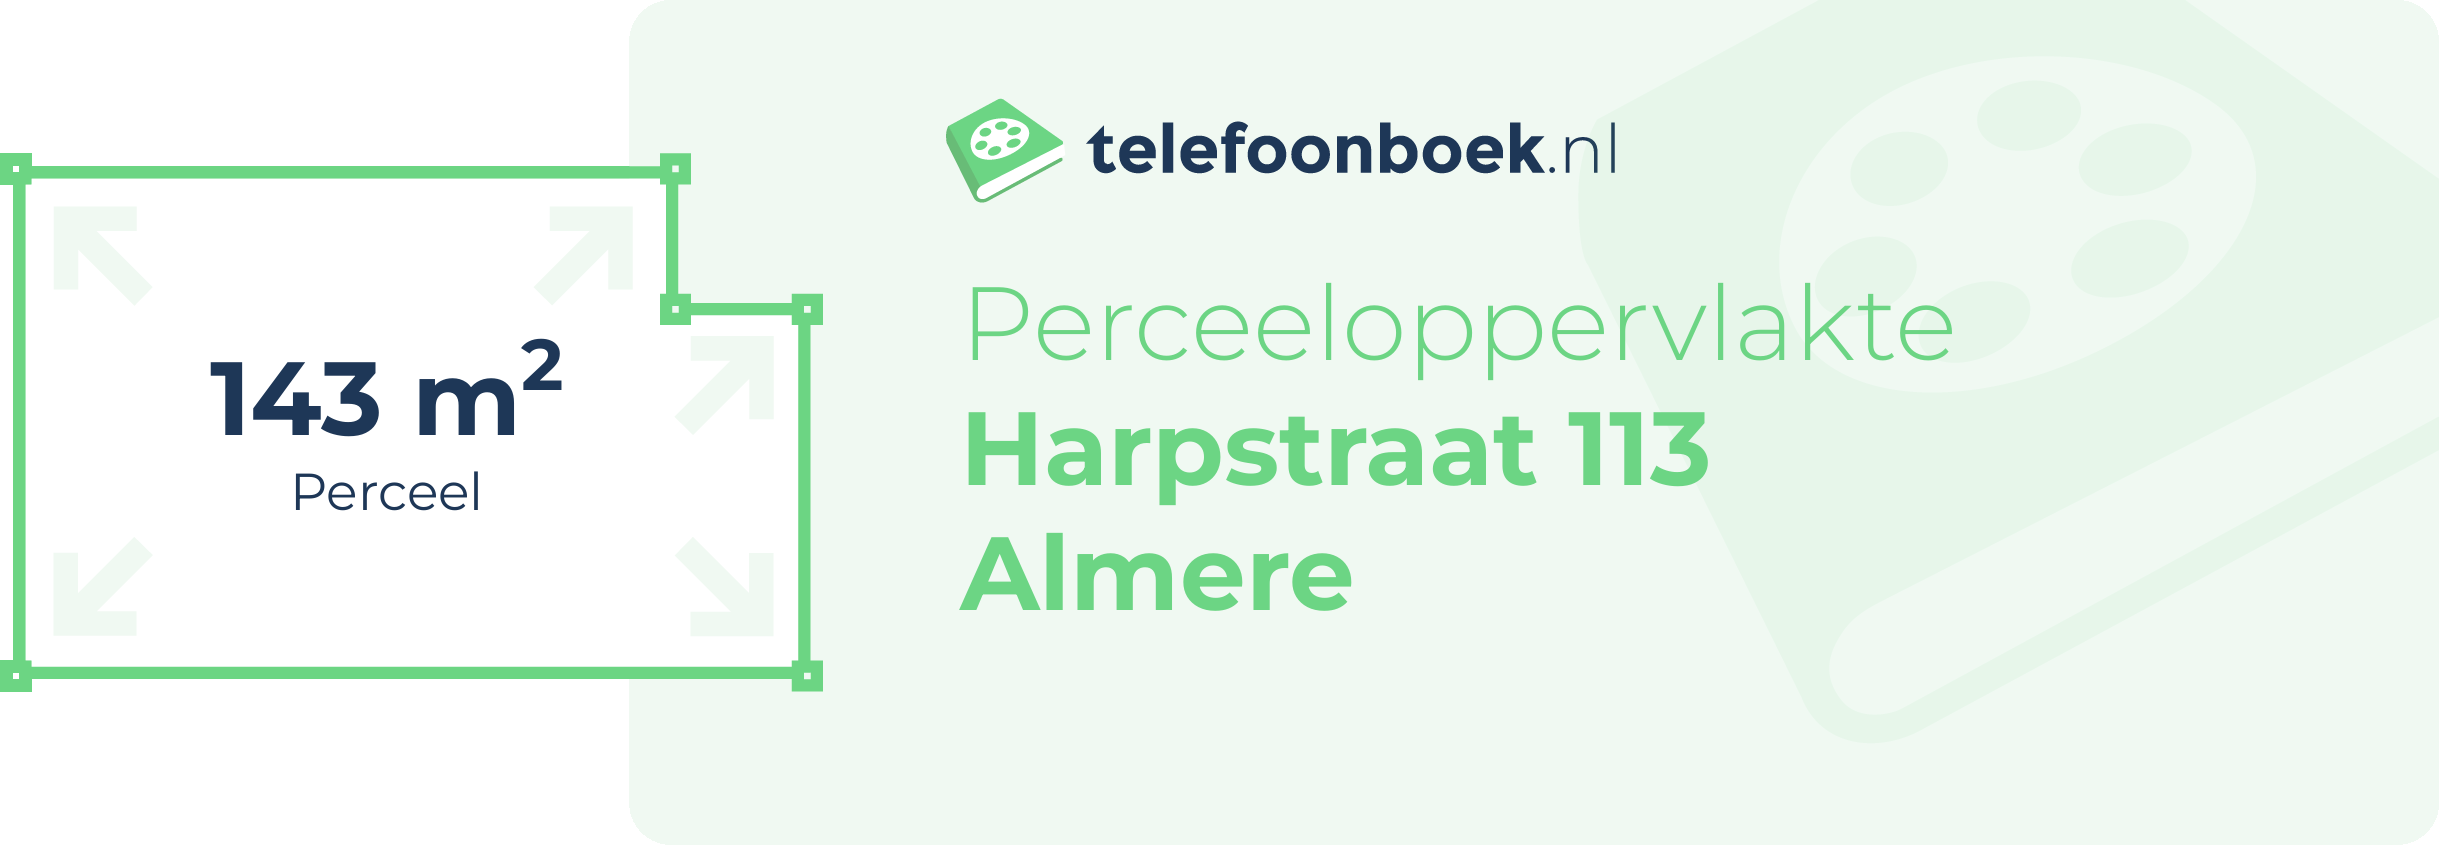 Perceeloppervlakte Harpstraat 113 Almere